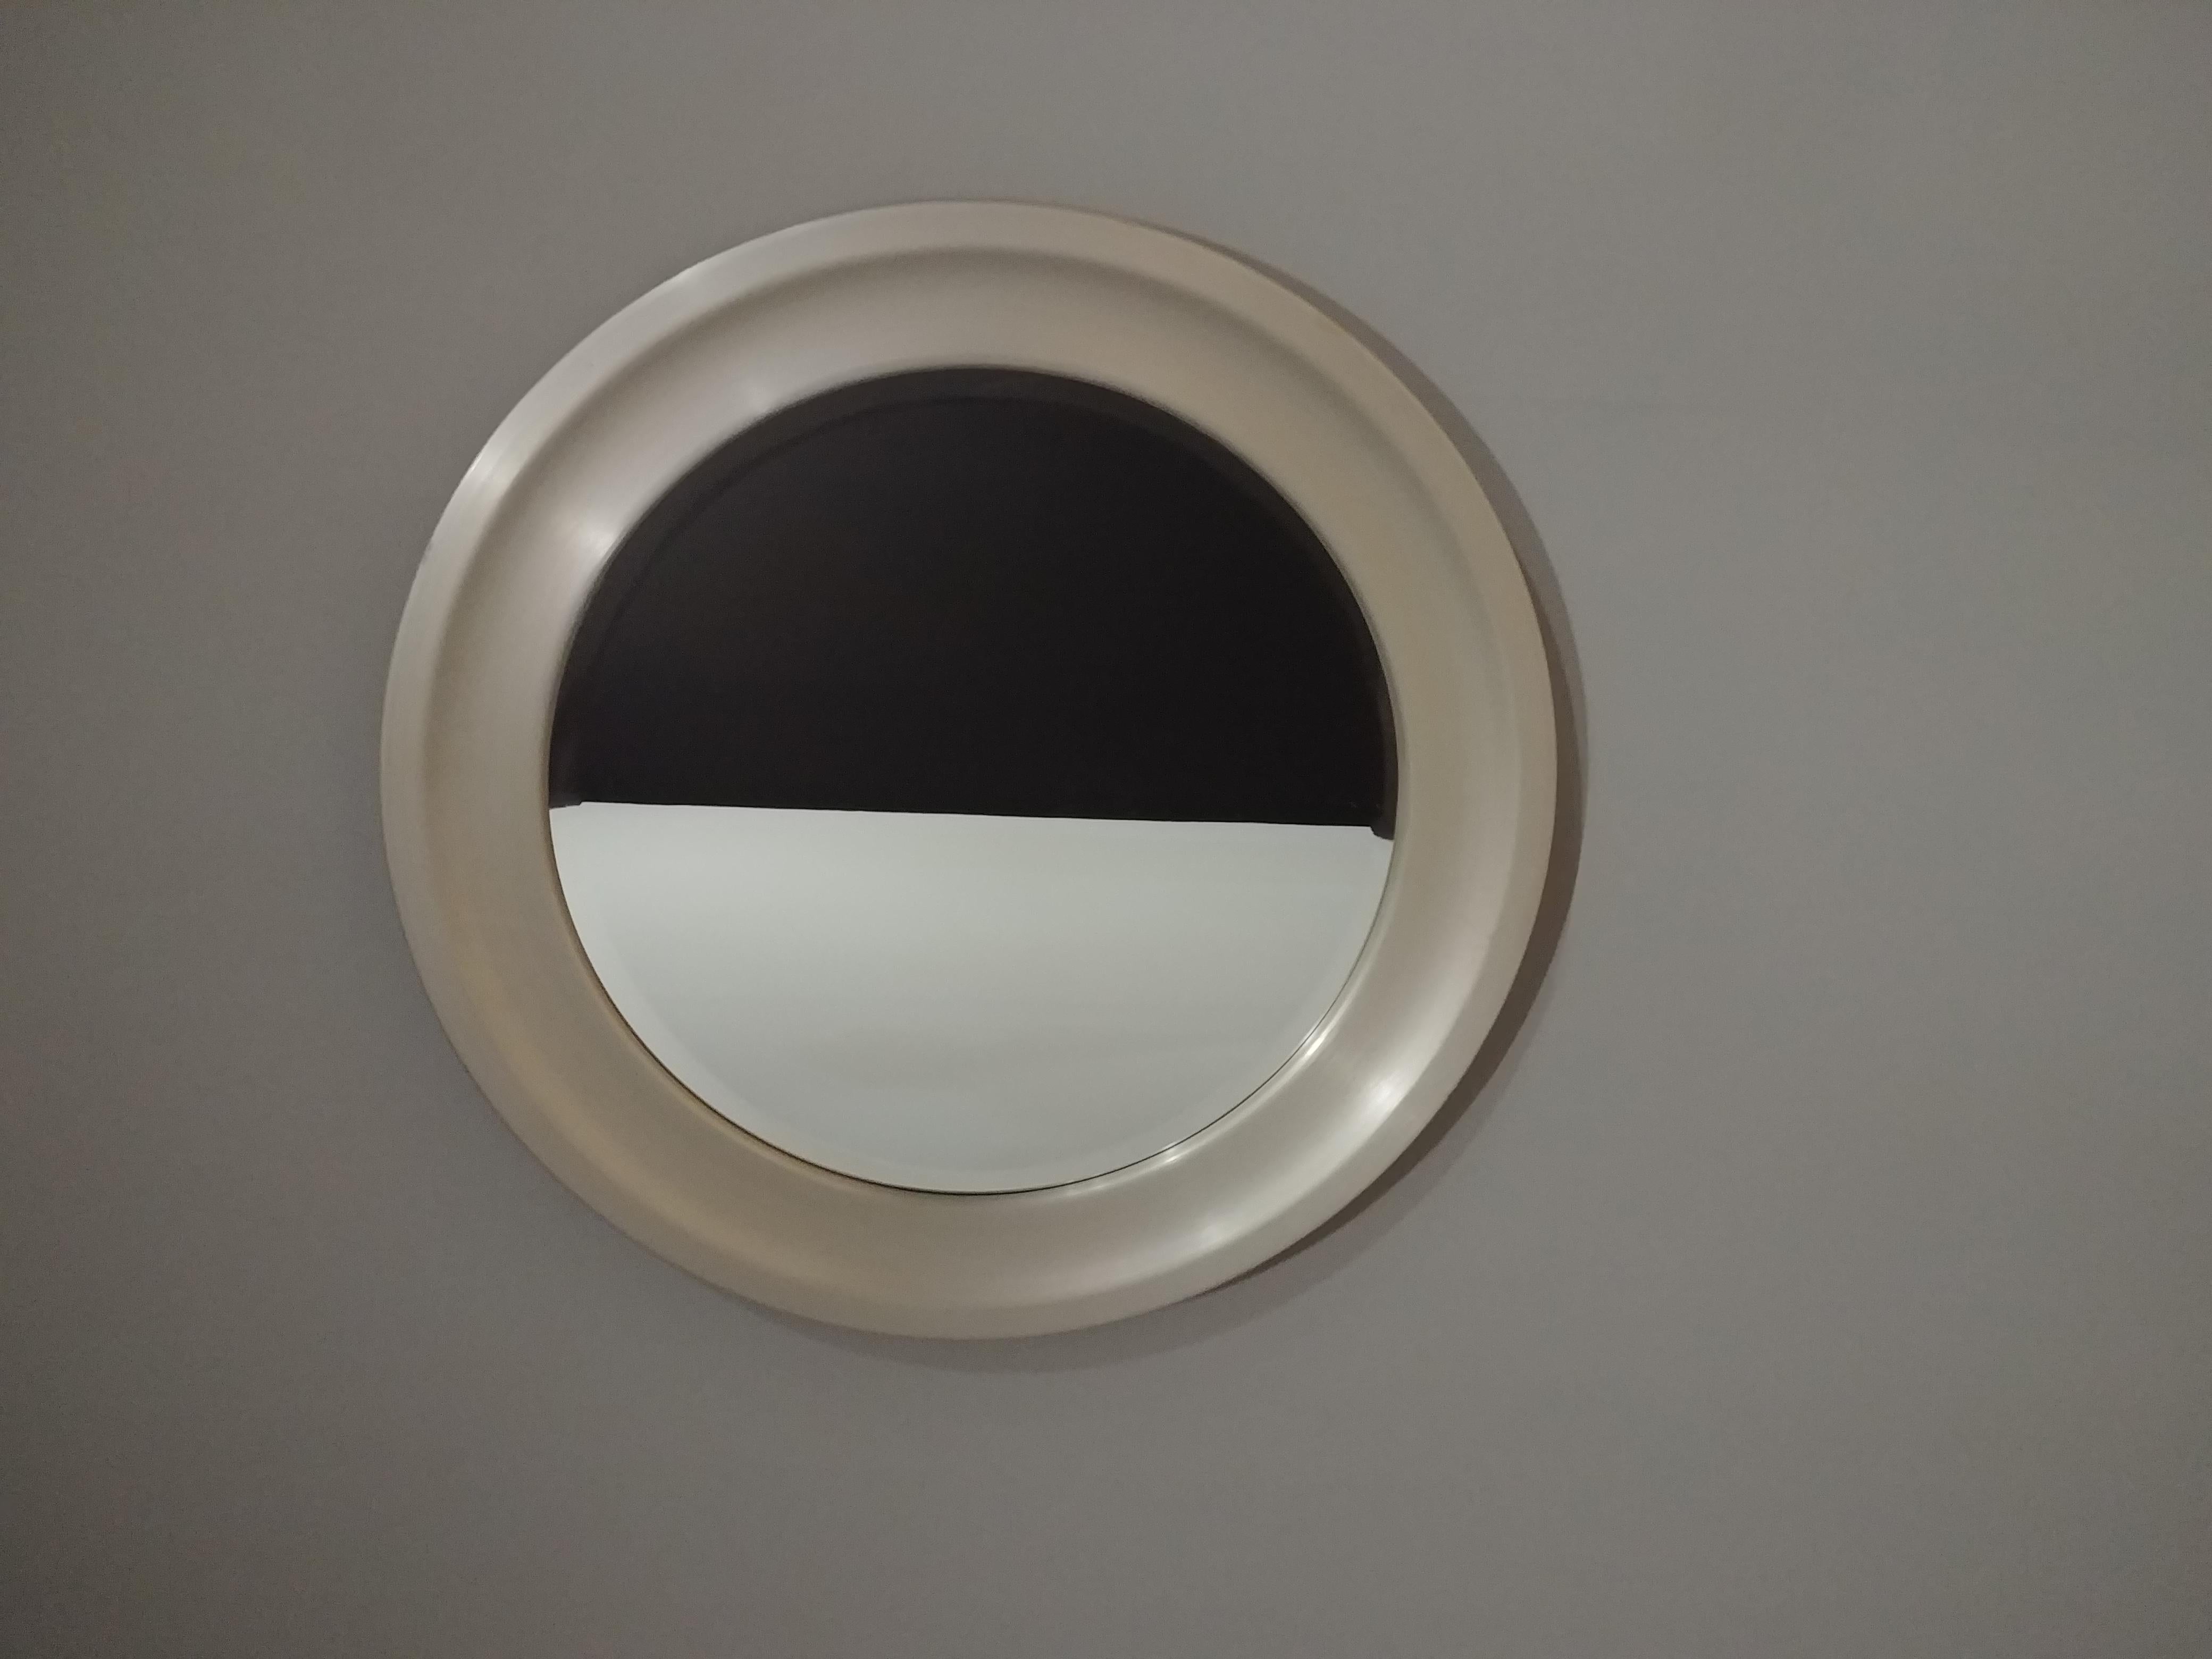 20th Century Wall Mirror Sergio Mazza for Artemide Midcentury Aluminum Italy Design 1960s